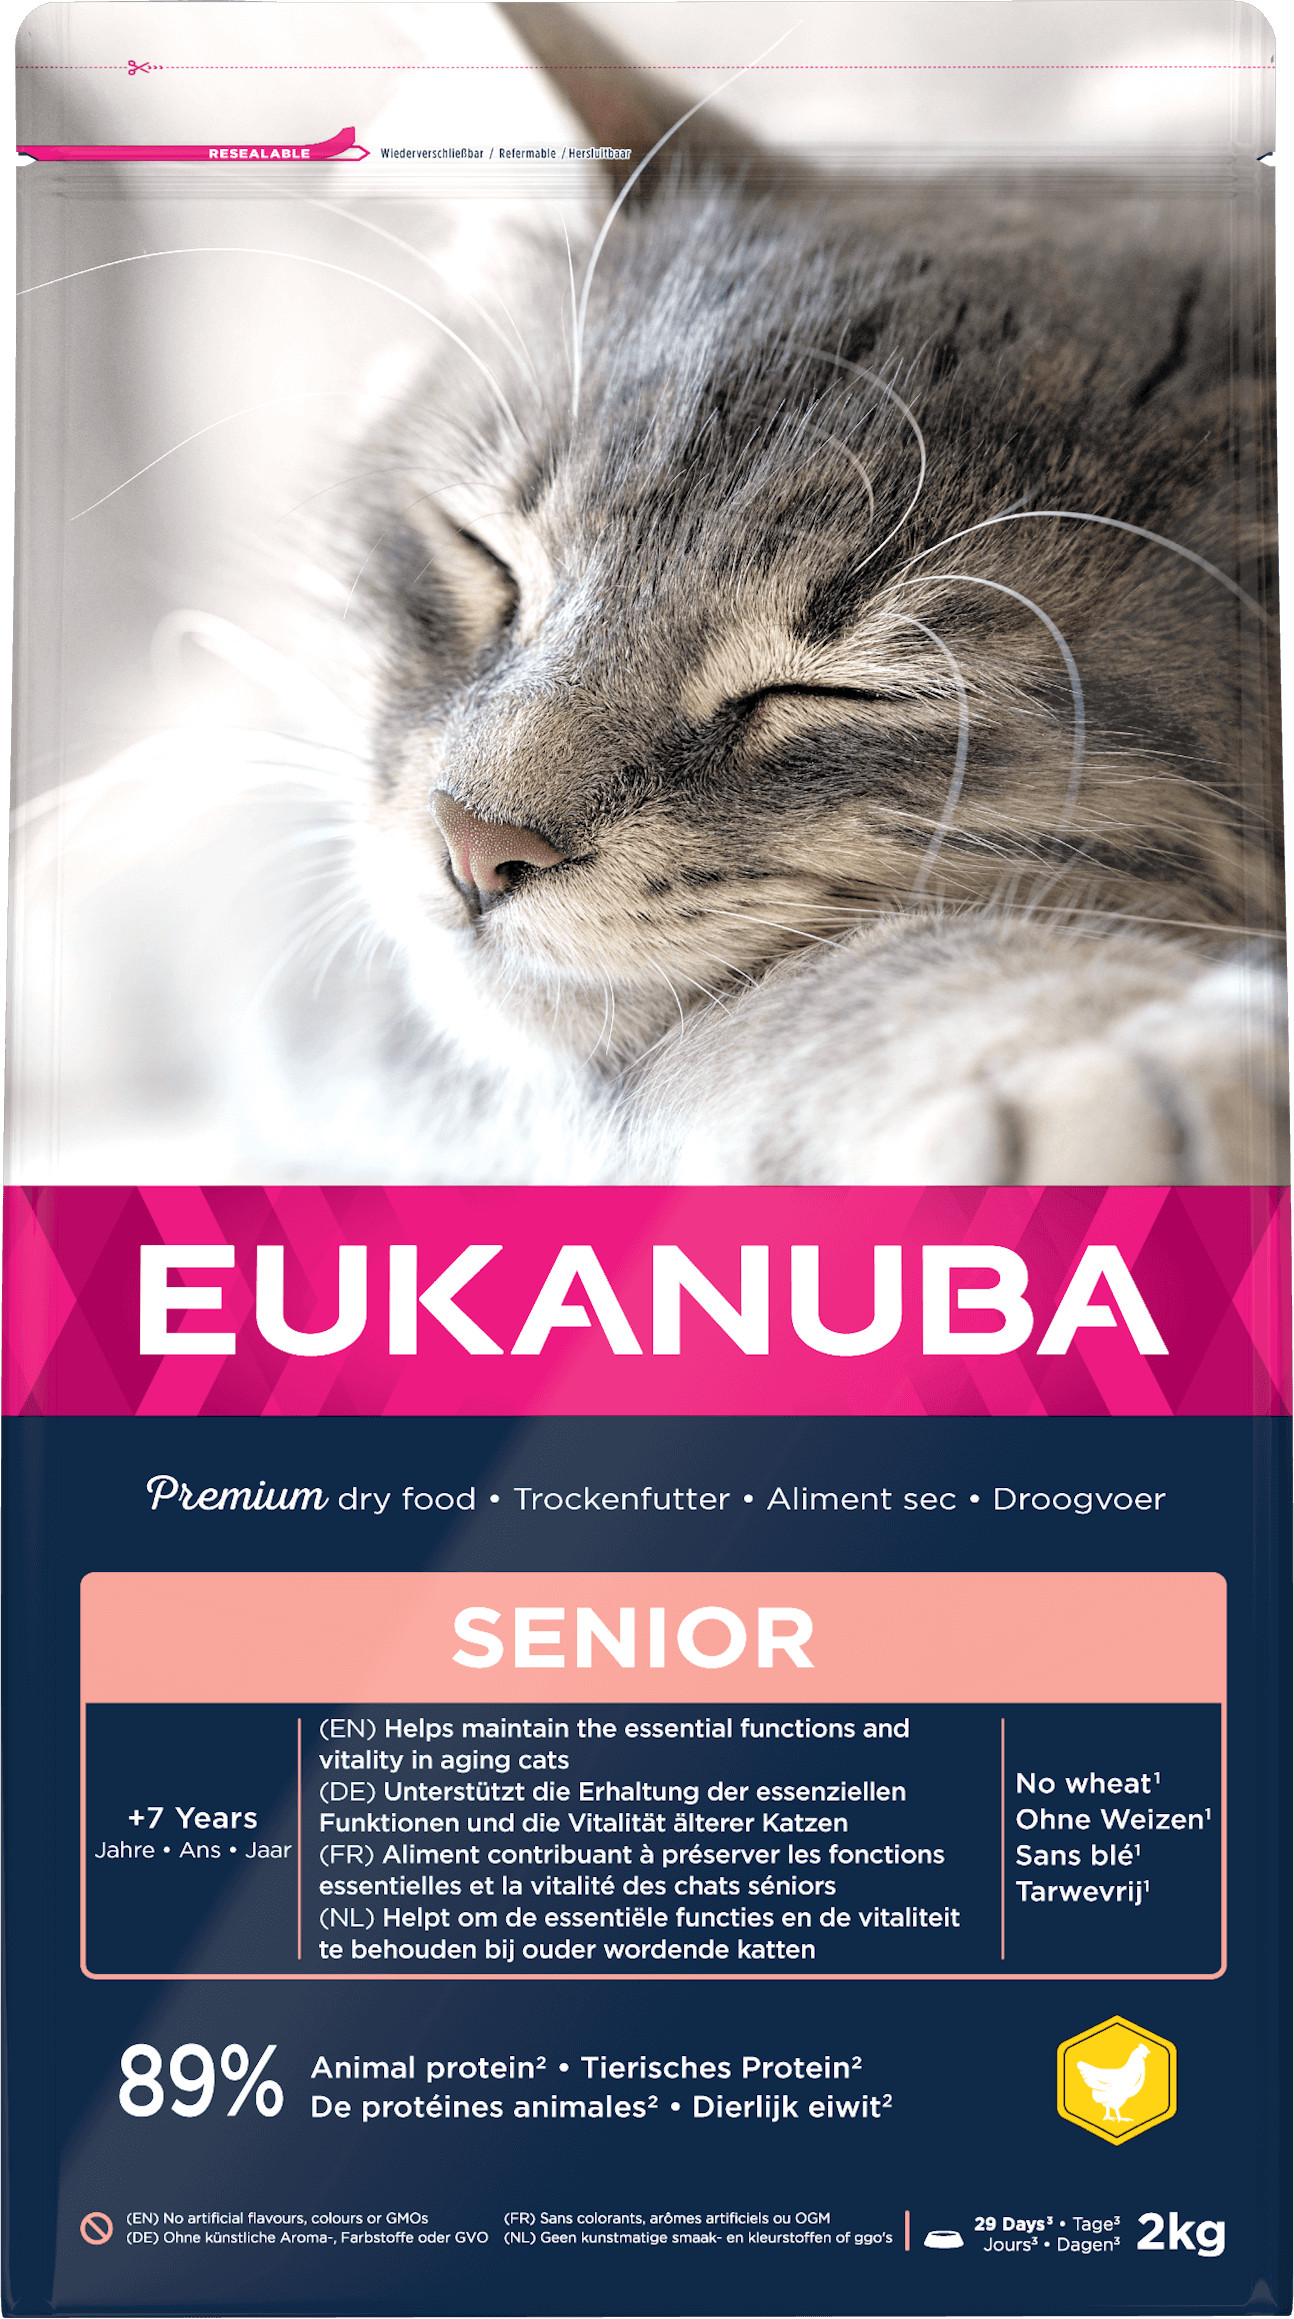 Eukanuba Senior au poulet pour chat